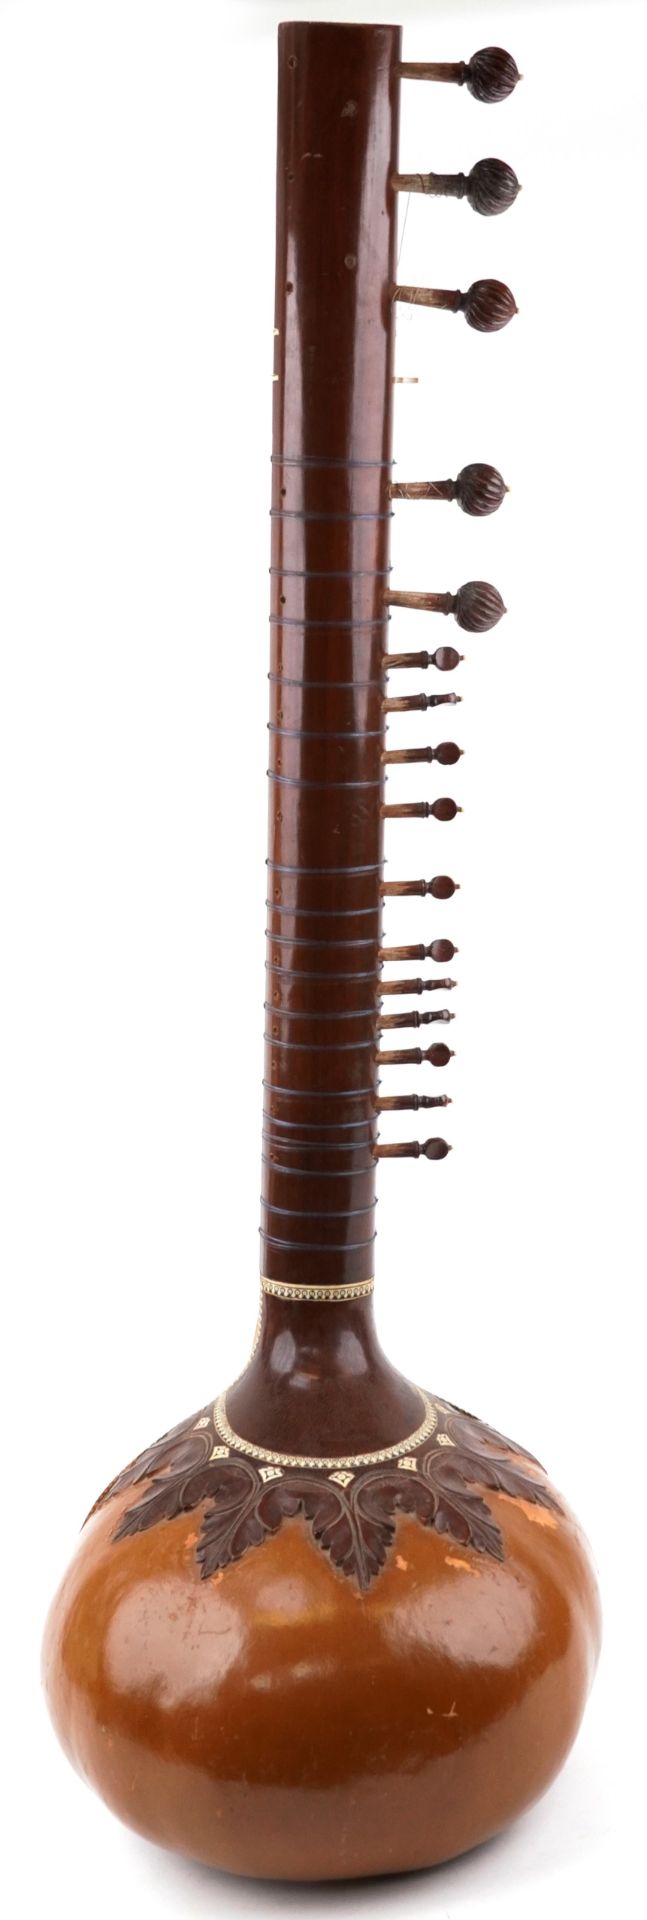 Indian hardwood, nut, ivorine and bone four string sitar, 126cm in length - Image 2 of 4